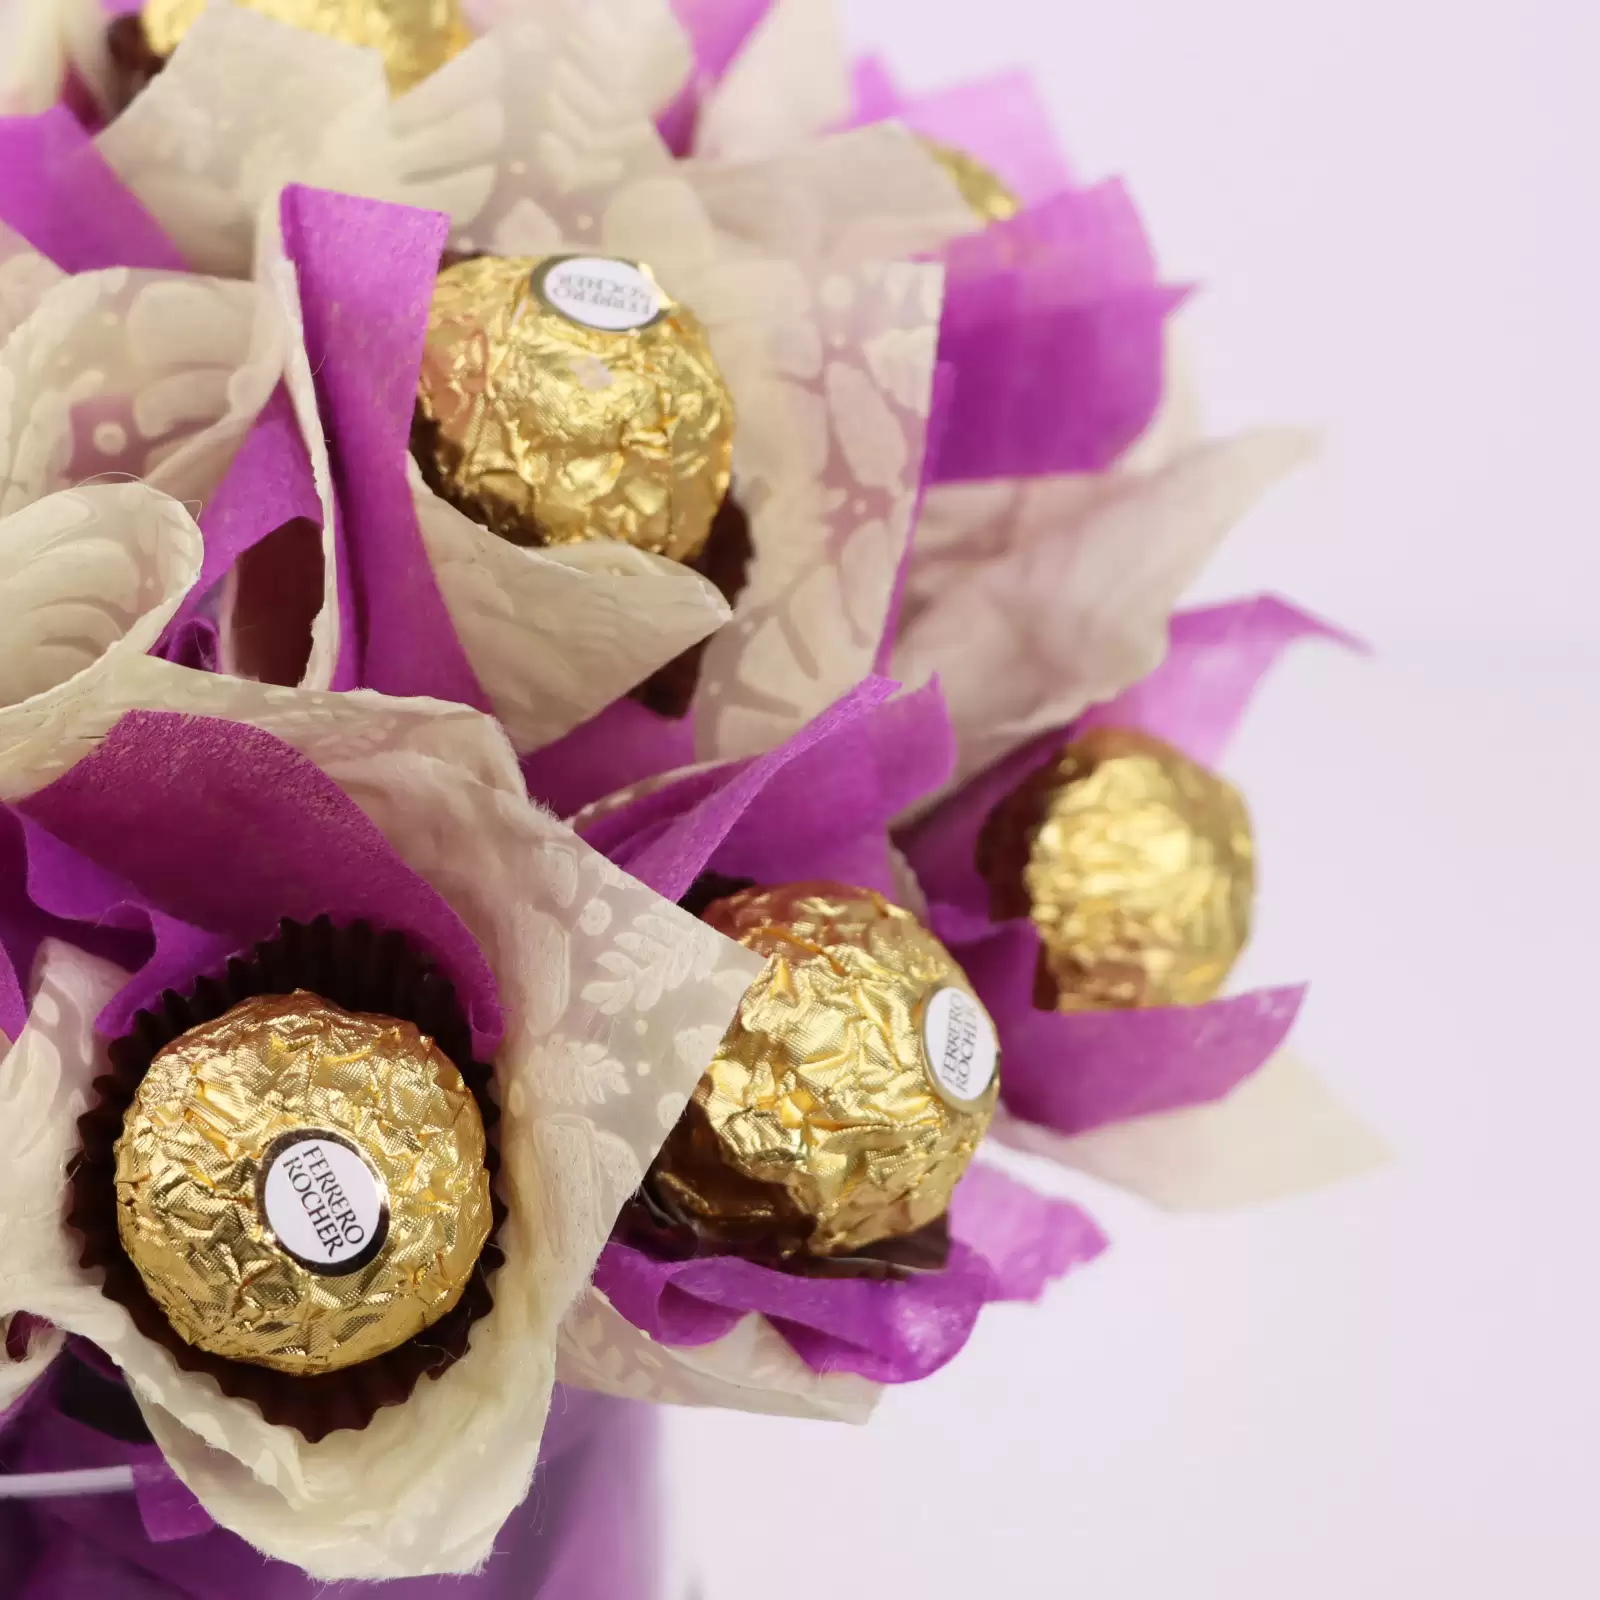 Choco Enchanting Vase | Send Chocolate Gifts In Bahrain - Flora D'lite